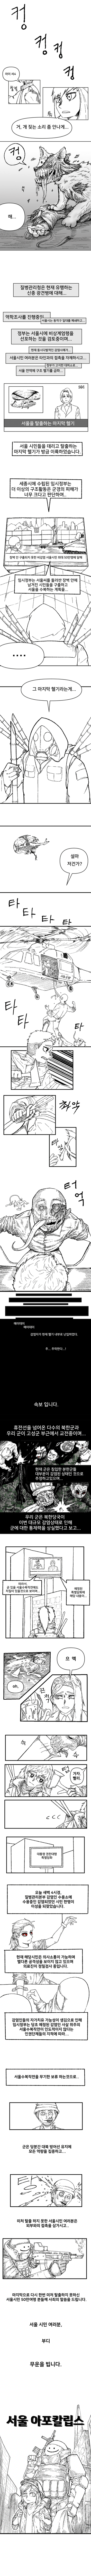 dcbest-20210928-231011-000.png 서울시에 좀비사태 일어나는 만화.manhwa